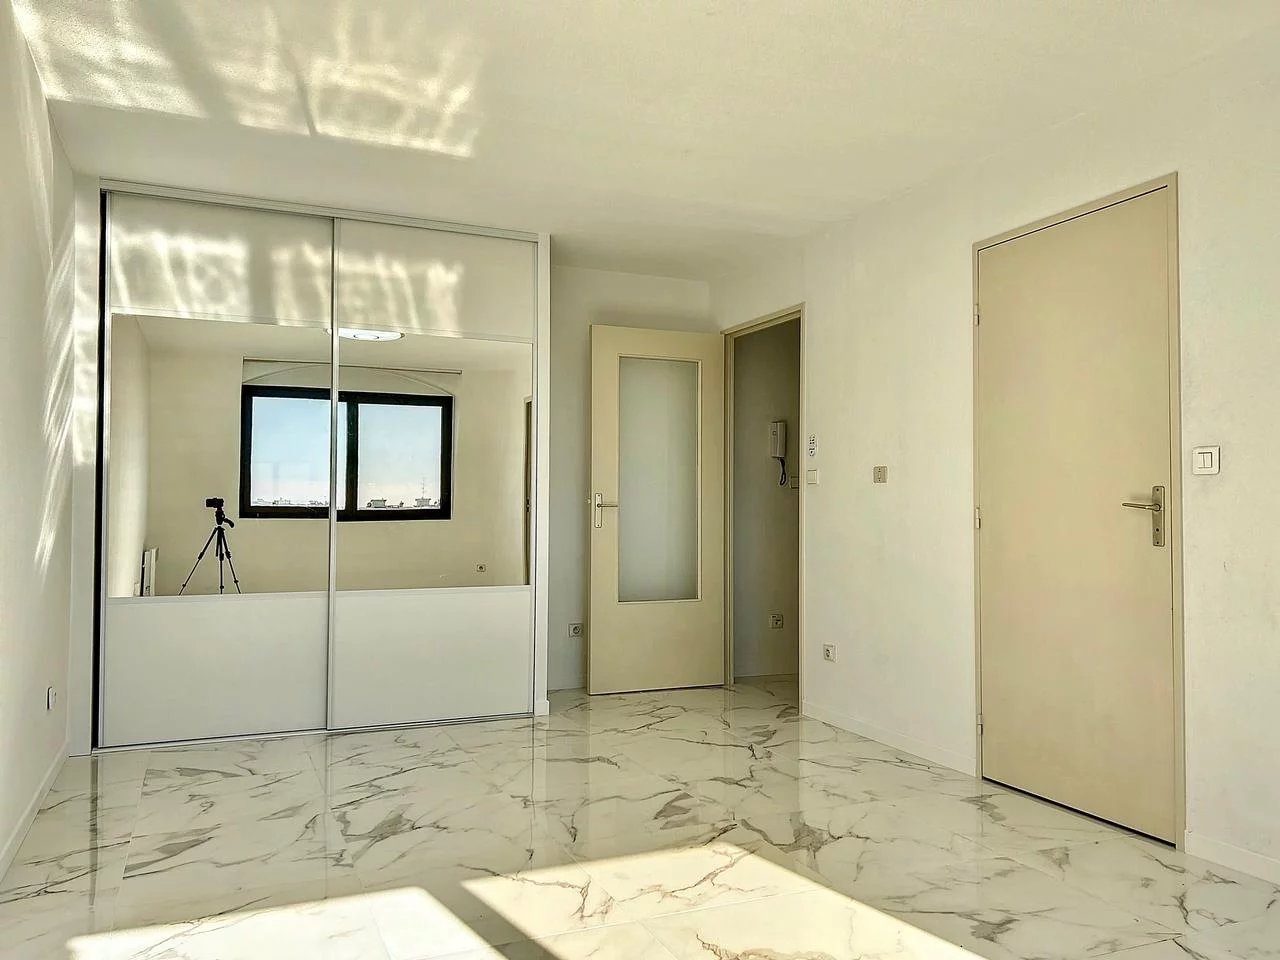 Appartement  1 Locali 28.83m2  In vendita   208 000 €